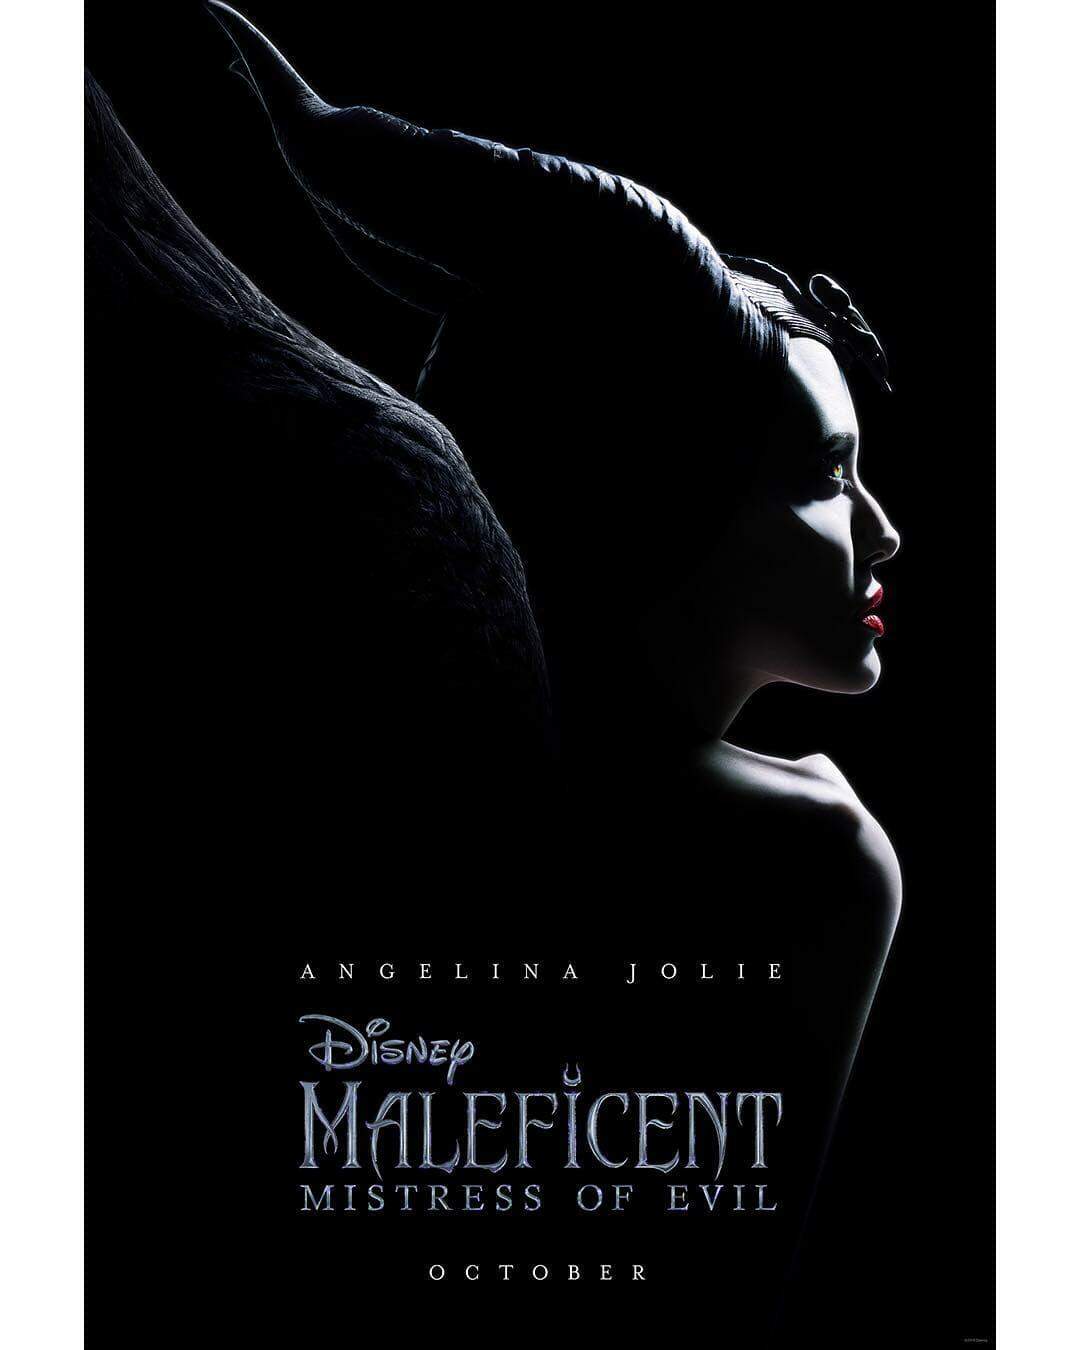 Angelina Jolie retorna em 'Maleficent 2: Mistress of evil' .